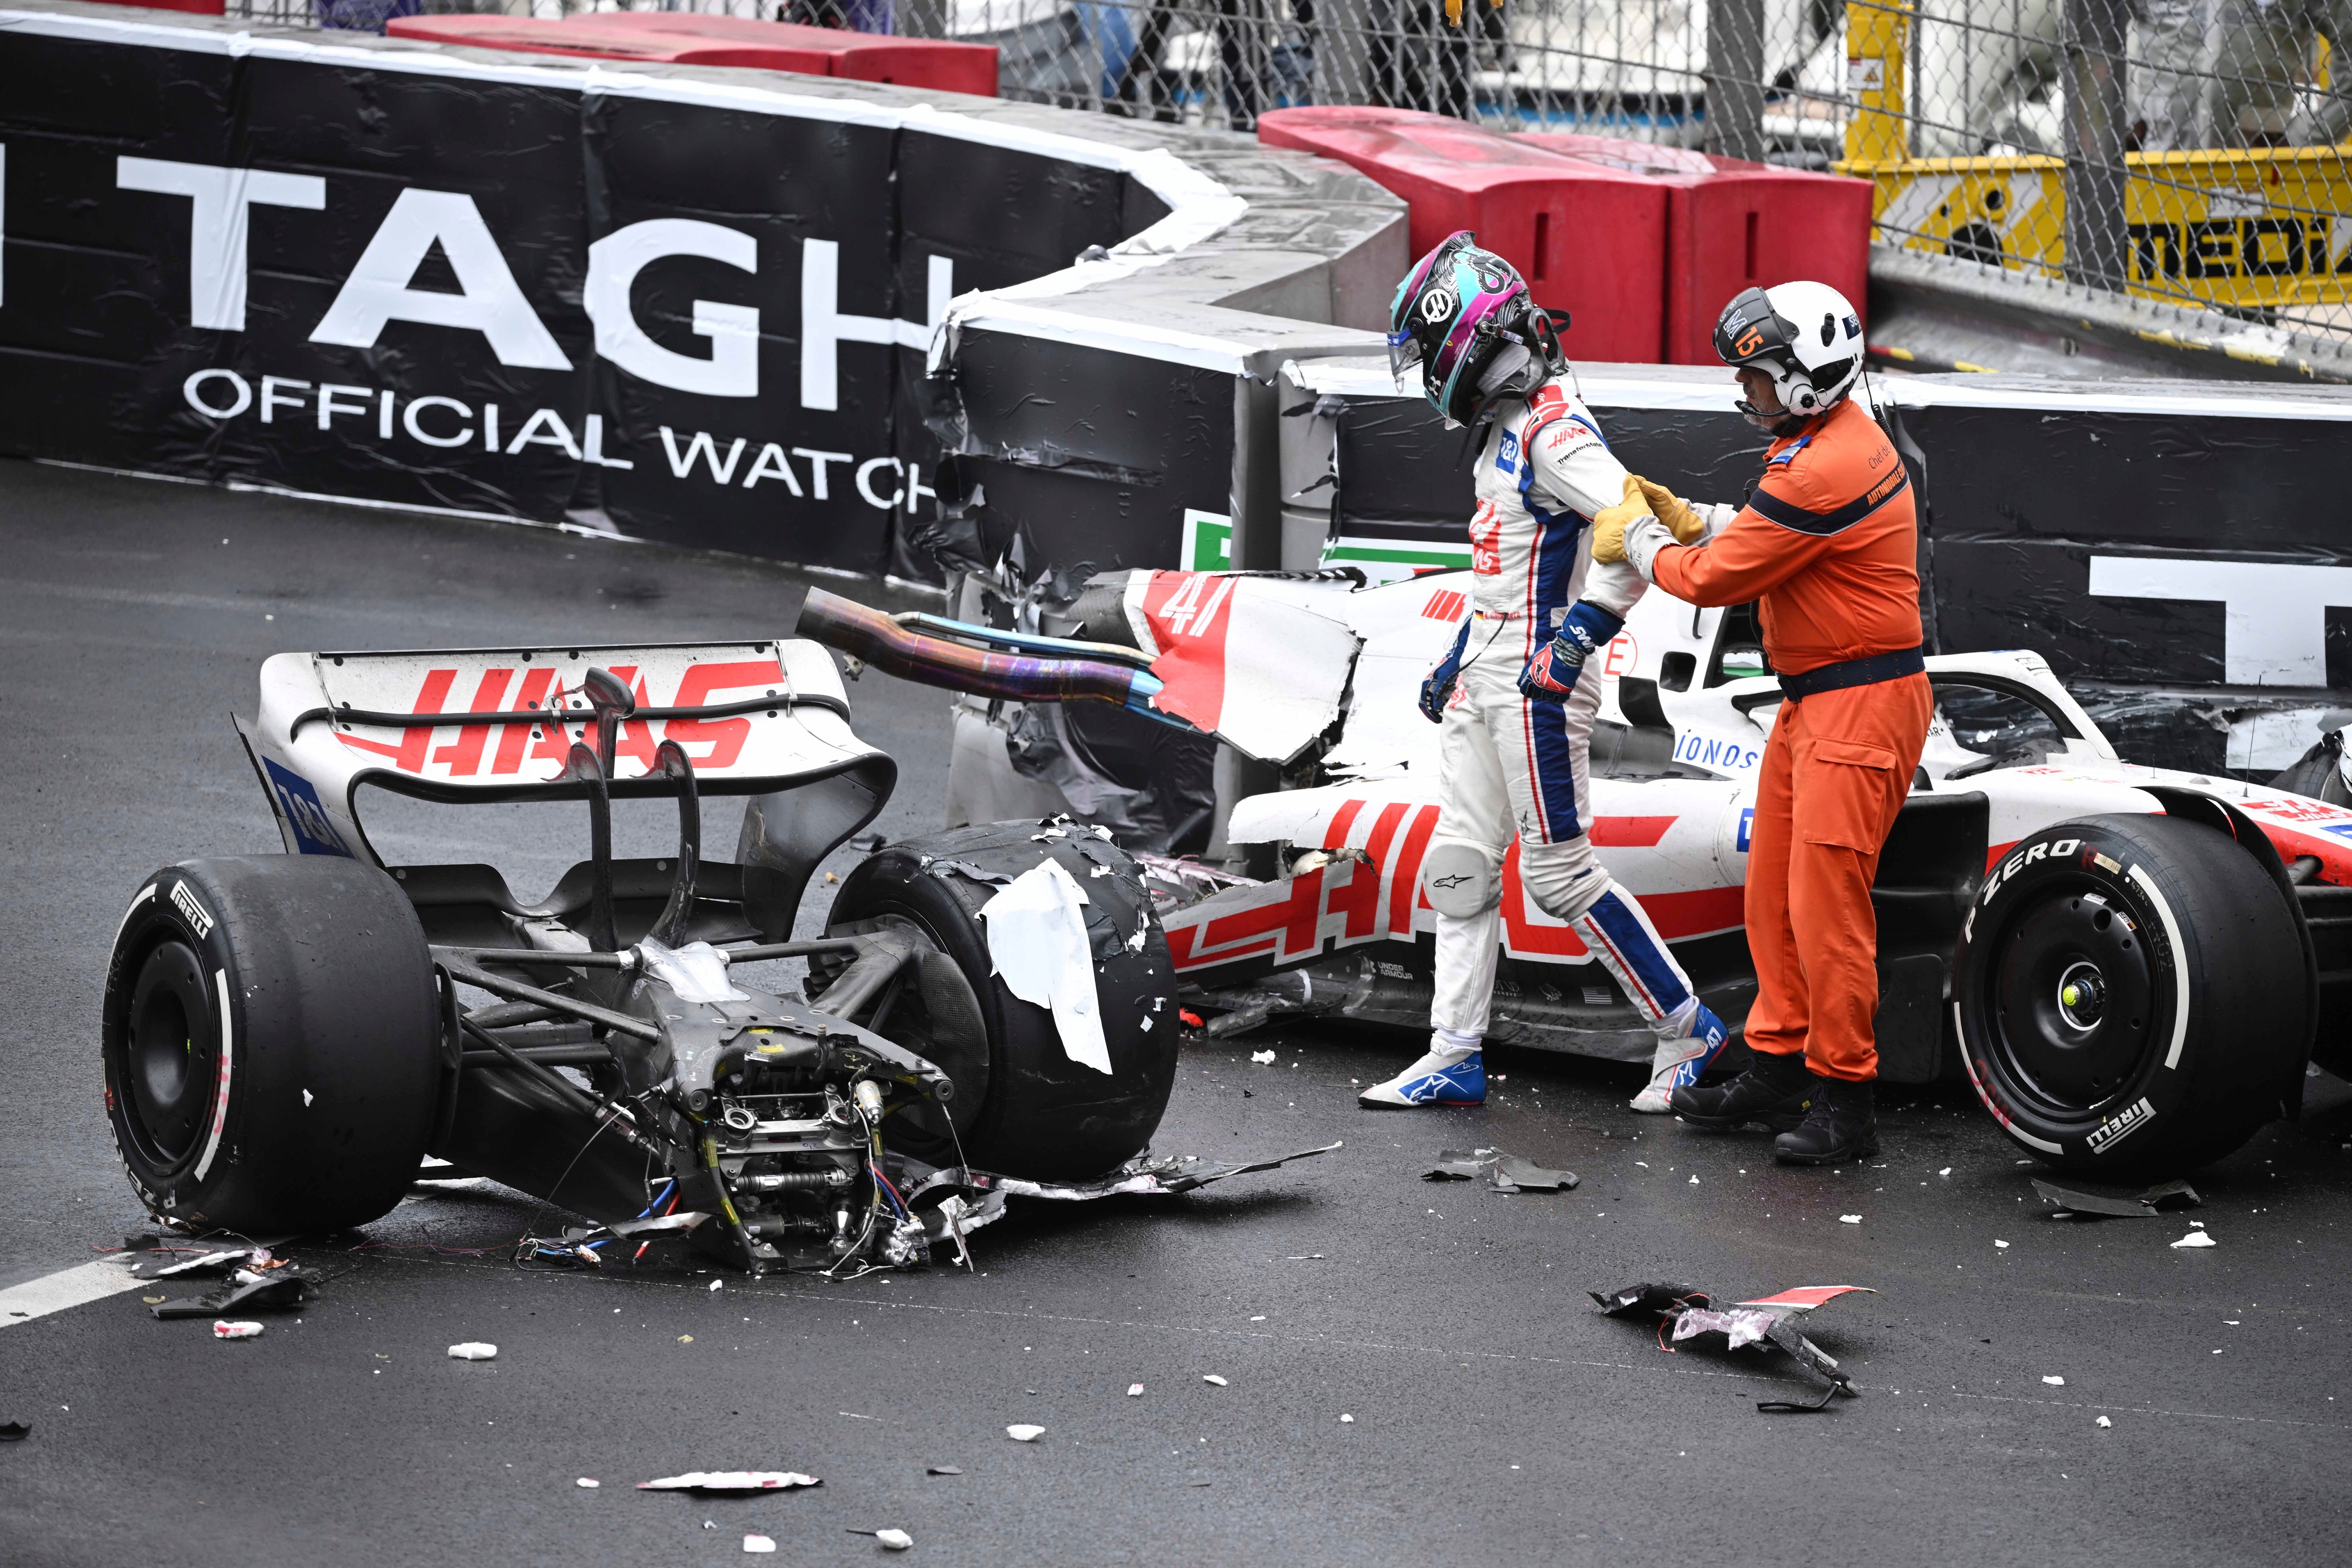 Mick Schumacher walks away safely after a spectacular crash (Christian Bruna/AP)